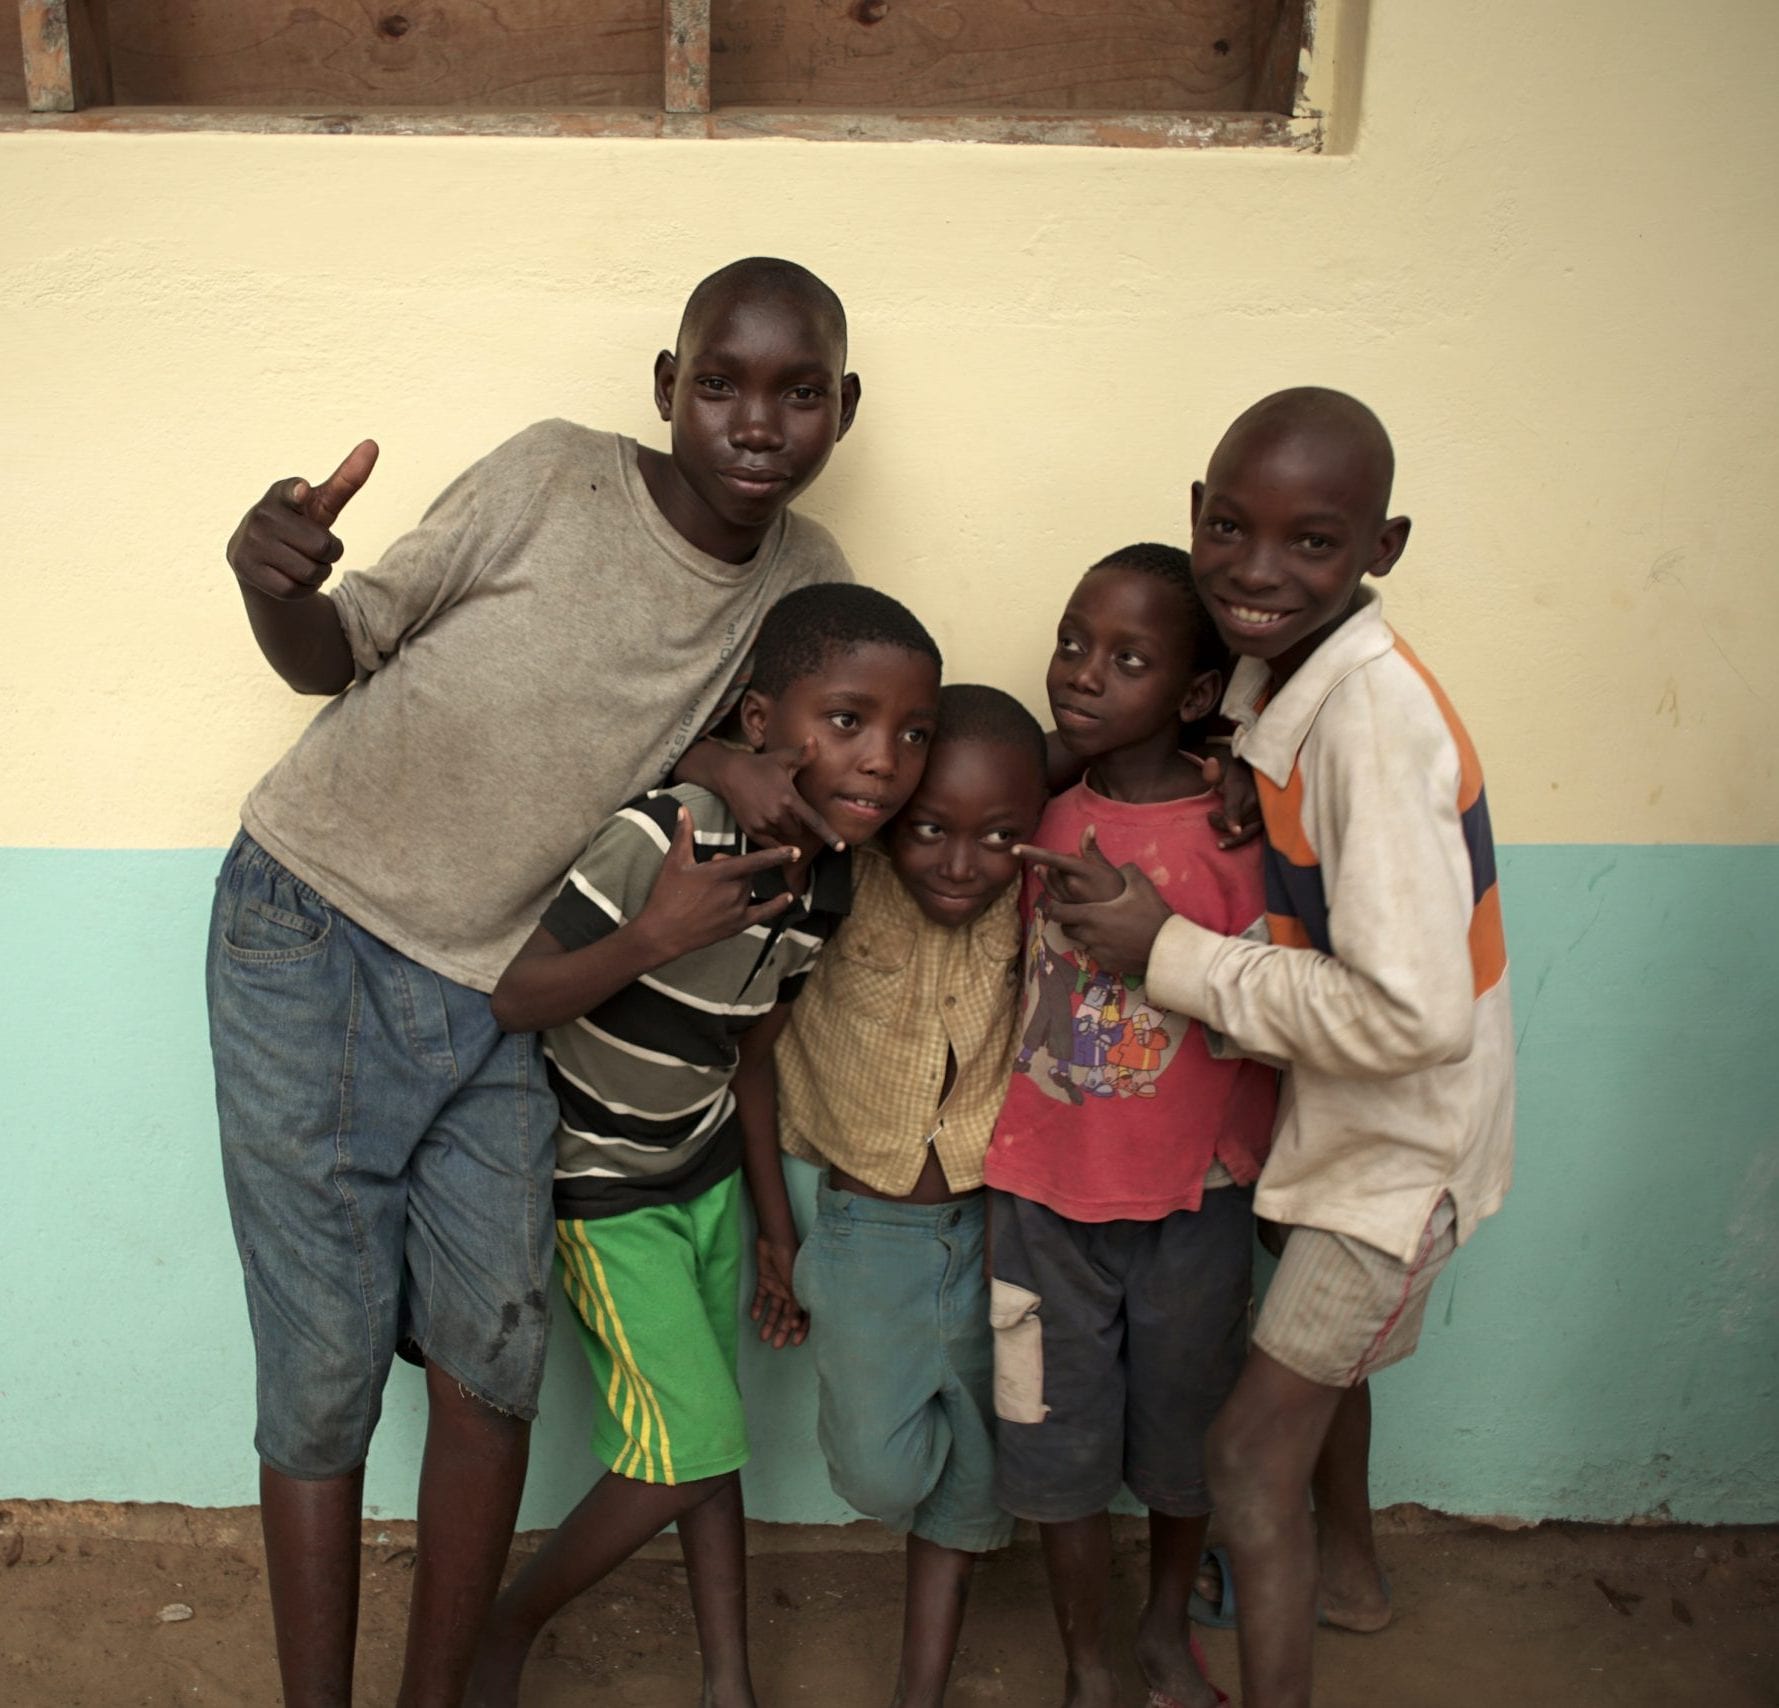 Five Kenyan children standing outside of a building together.